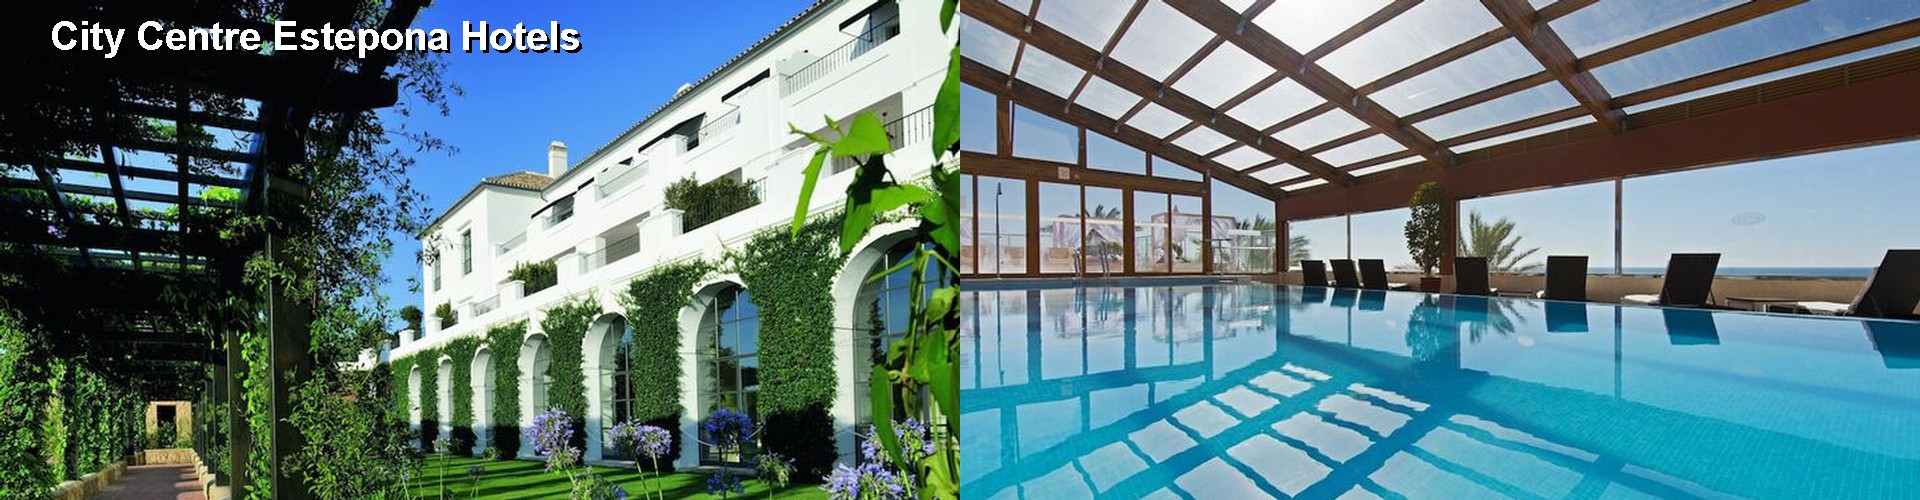 5 Best Hotels near City Centre Estepona